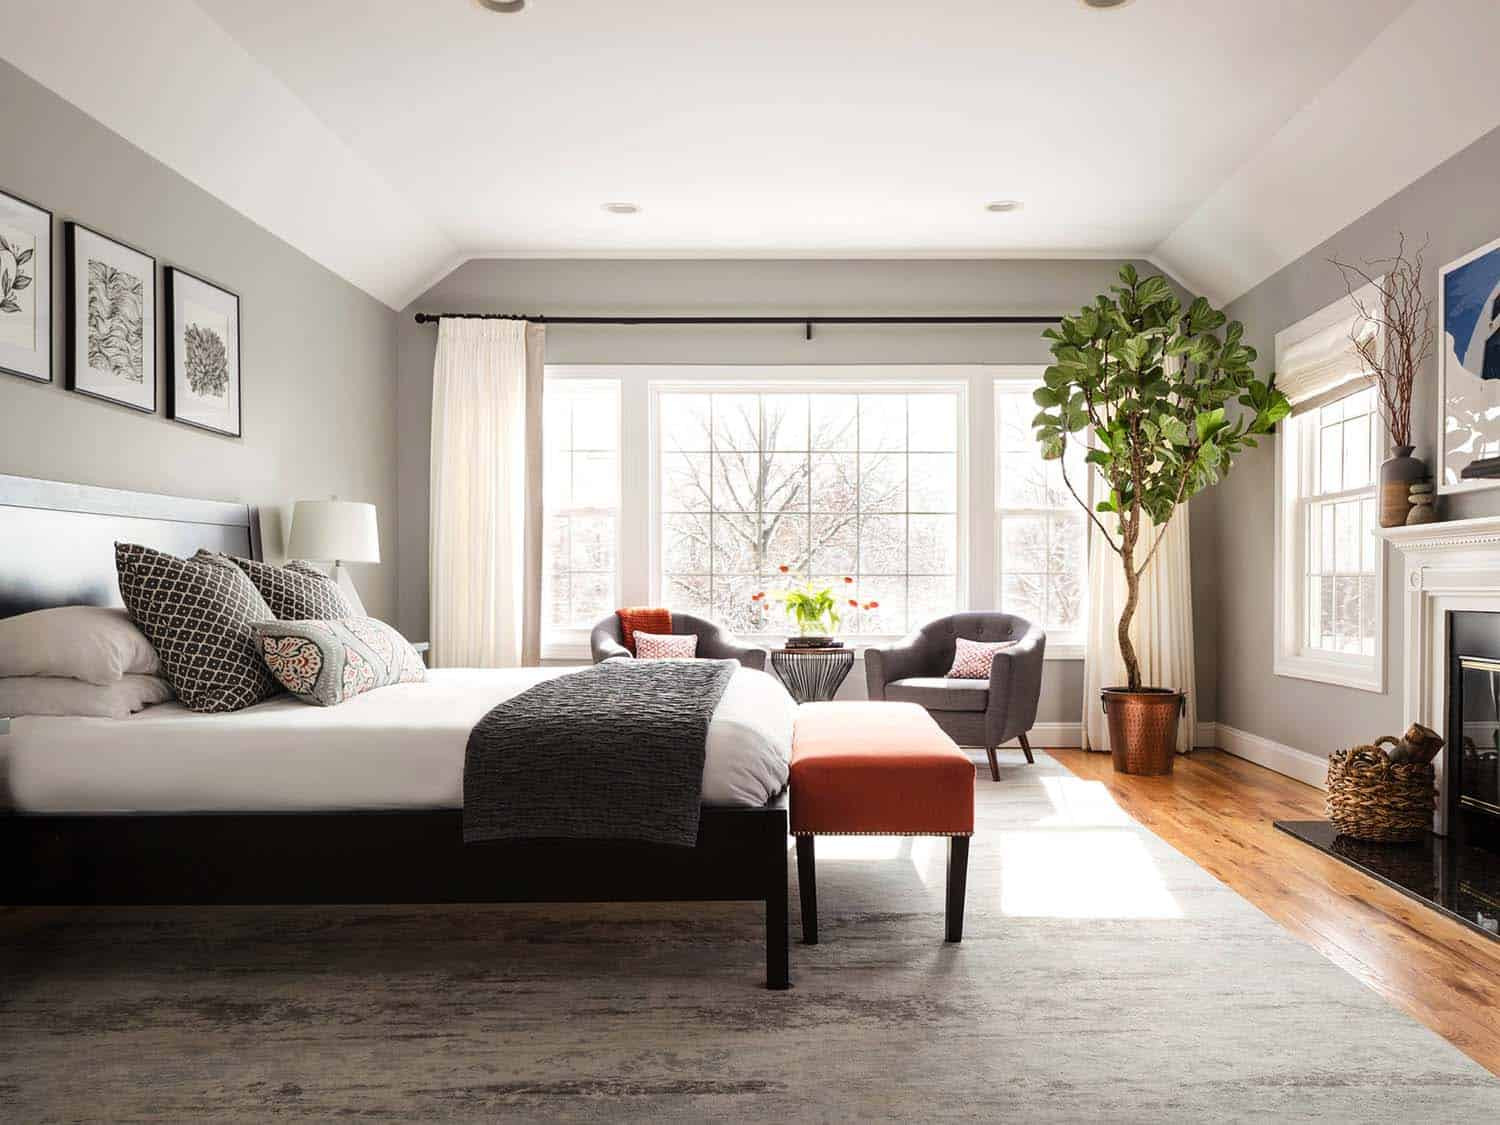 Master Bedroom Ideas
 20 Serene And Elegant Master Bedroom Decorating Ideas